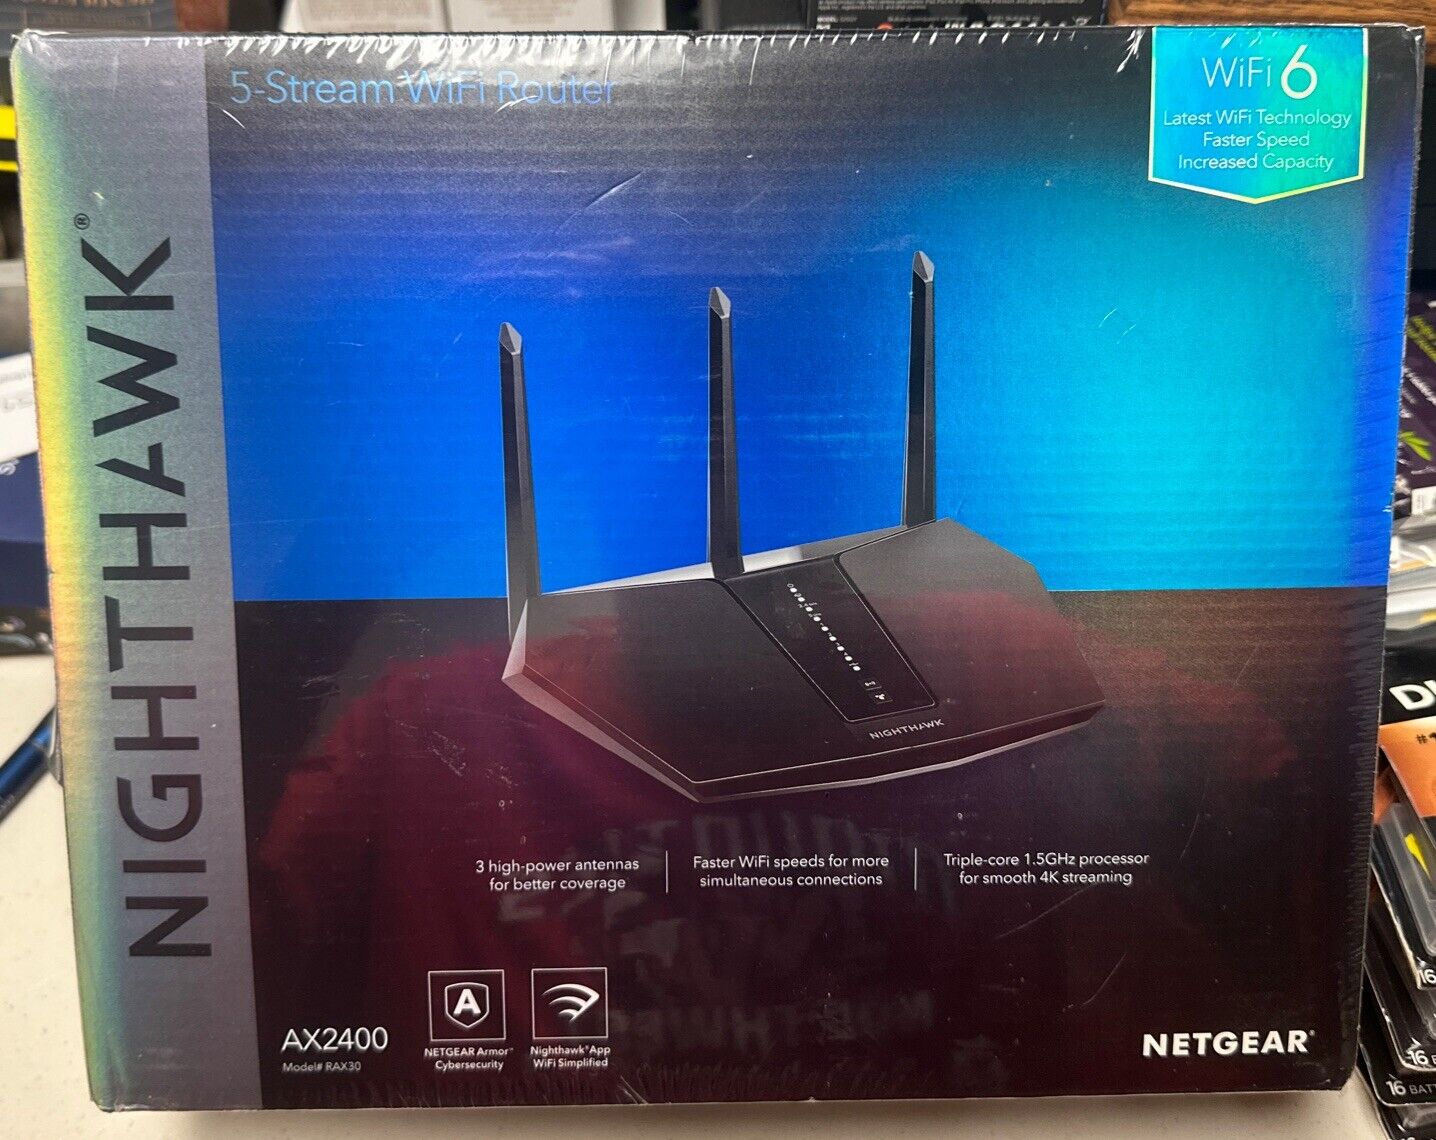 Netgear Nighthawk AX2400 5-Stream WiFi 6 Router NEW SEALED